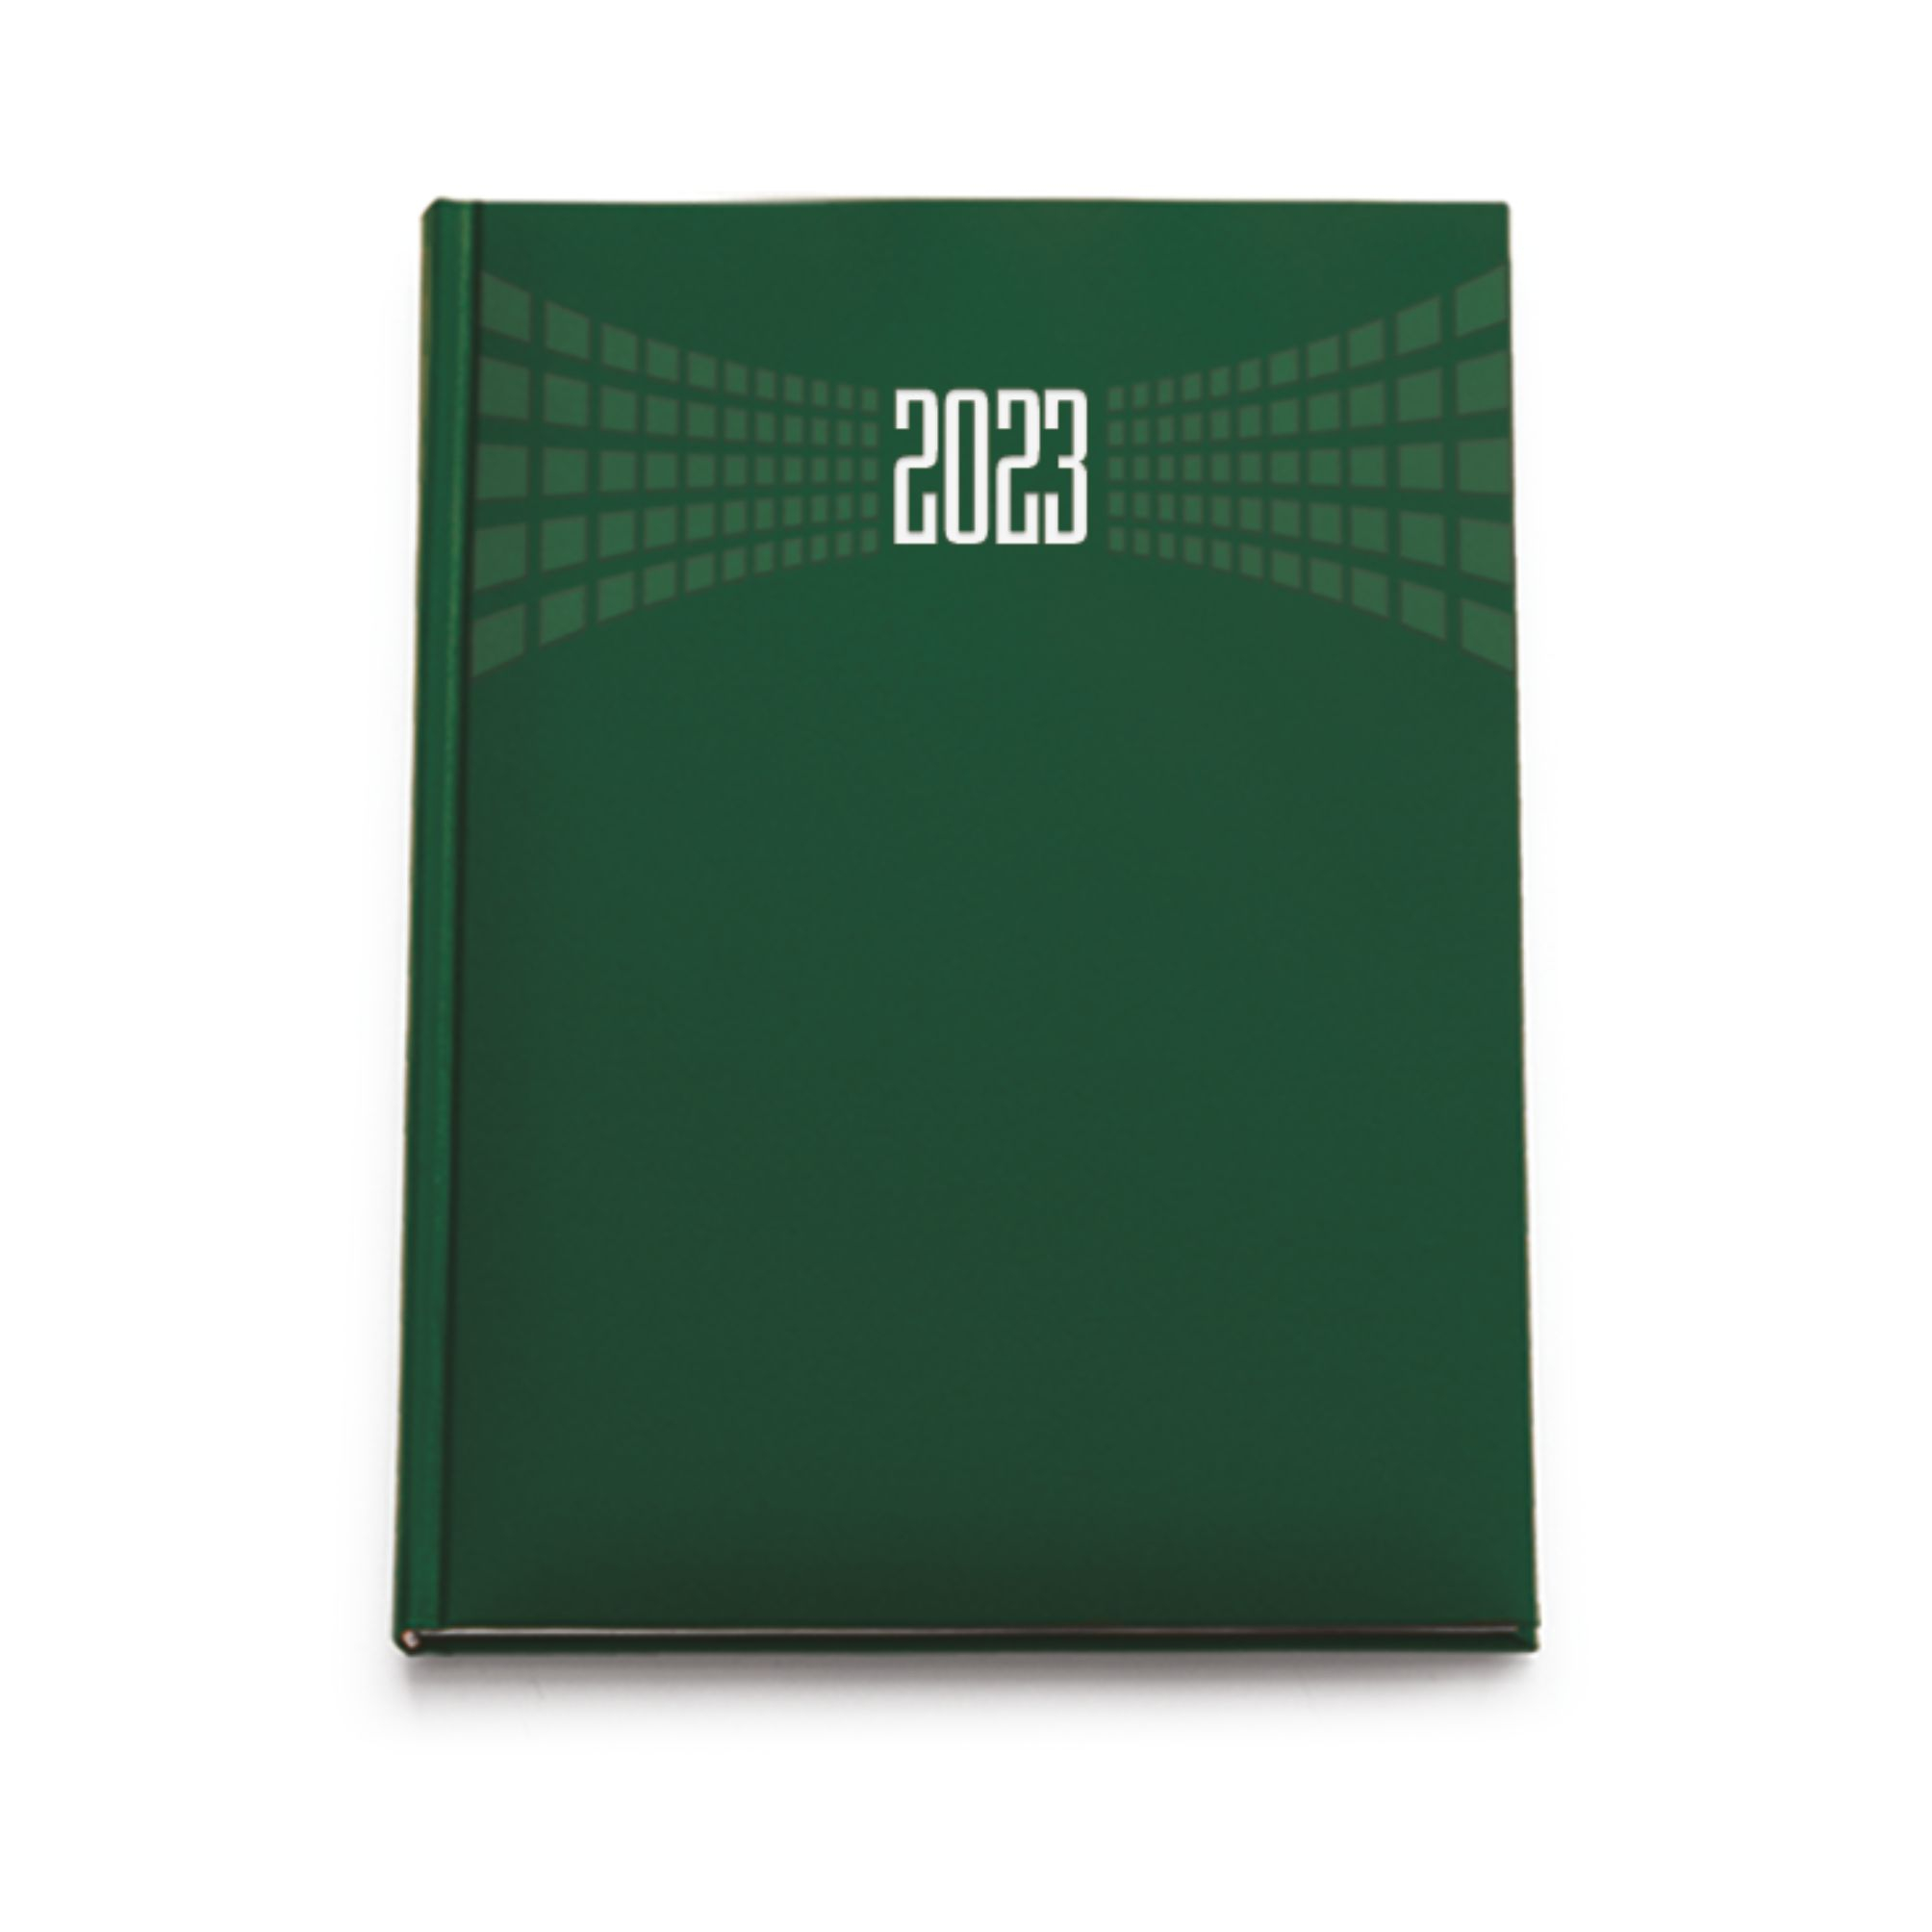 0183-agenda-giornaliera-matra-cm-11x17-verde.jpg